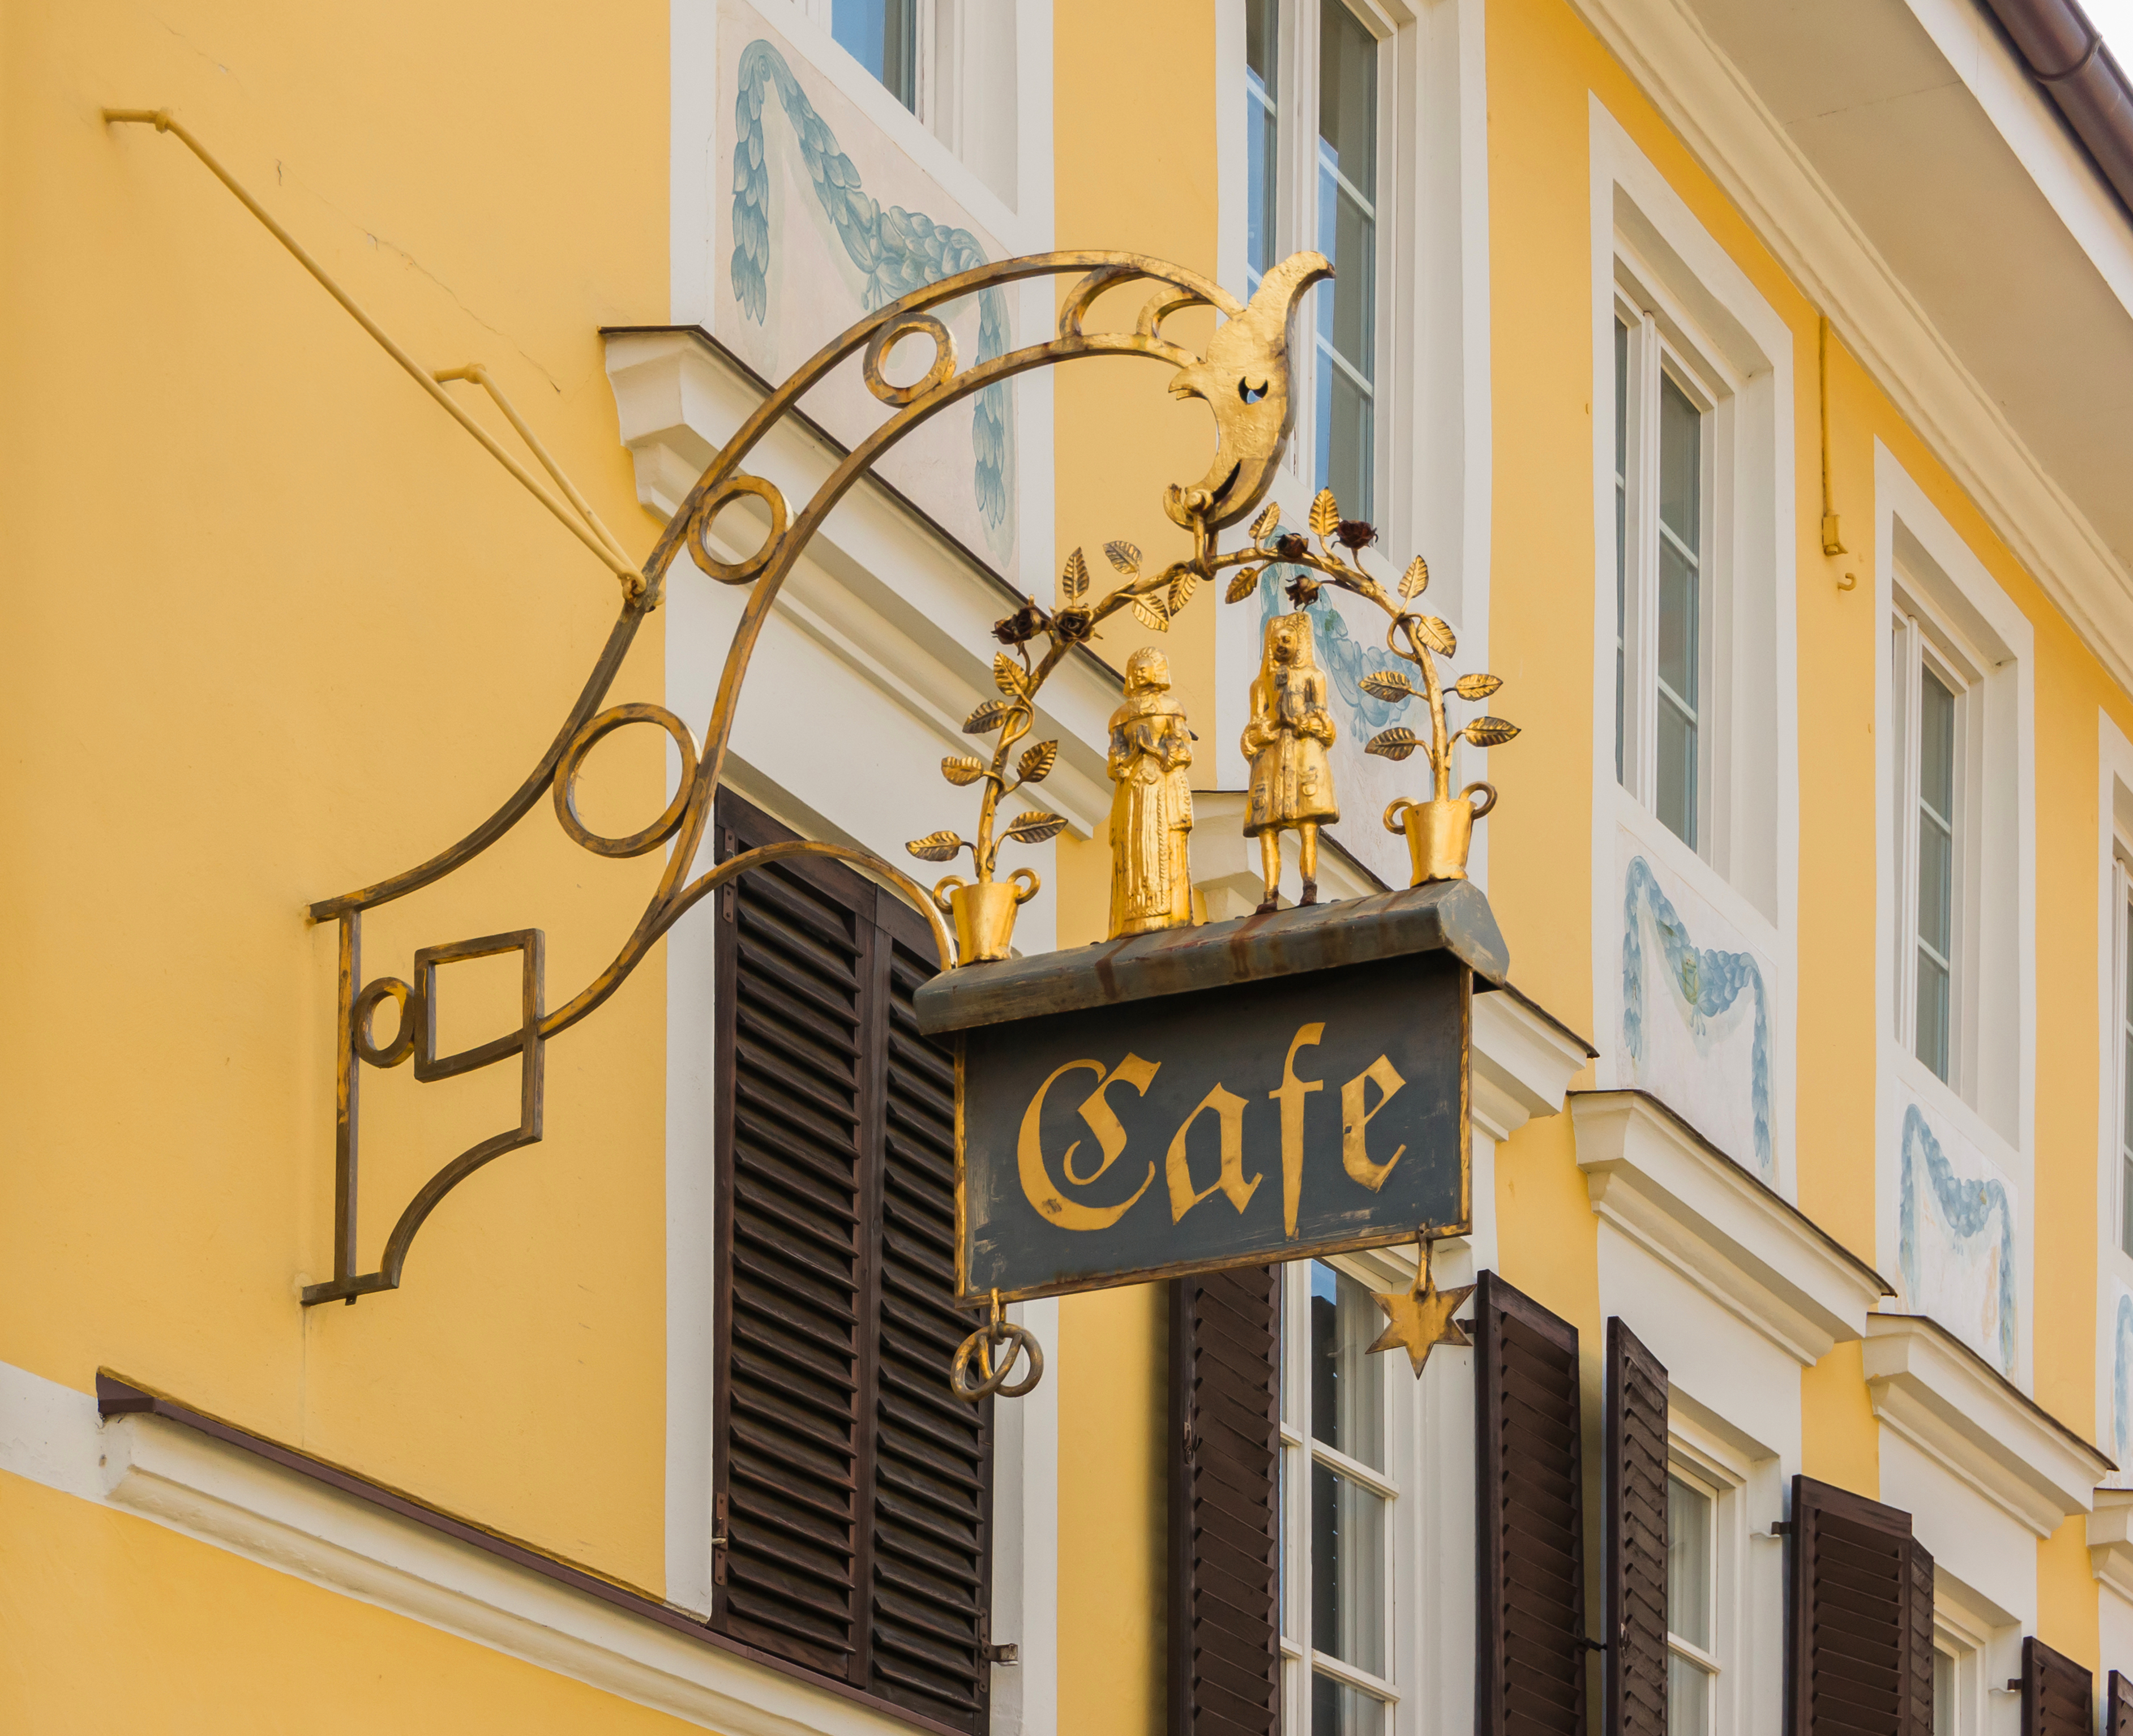 Cafe sign, Murnau, Bavaria, Germany